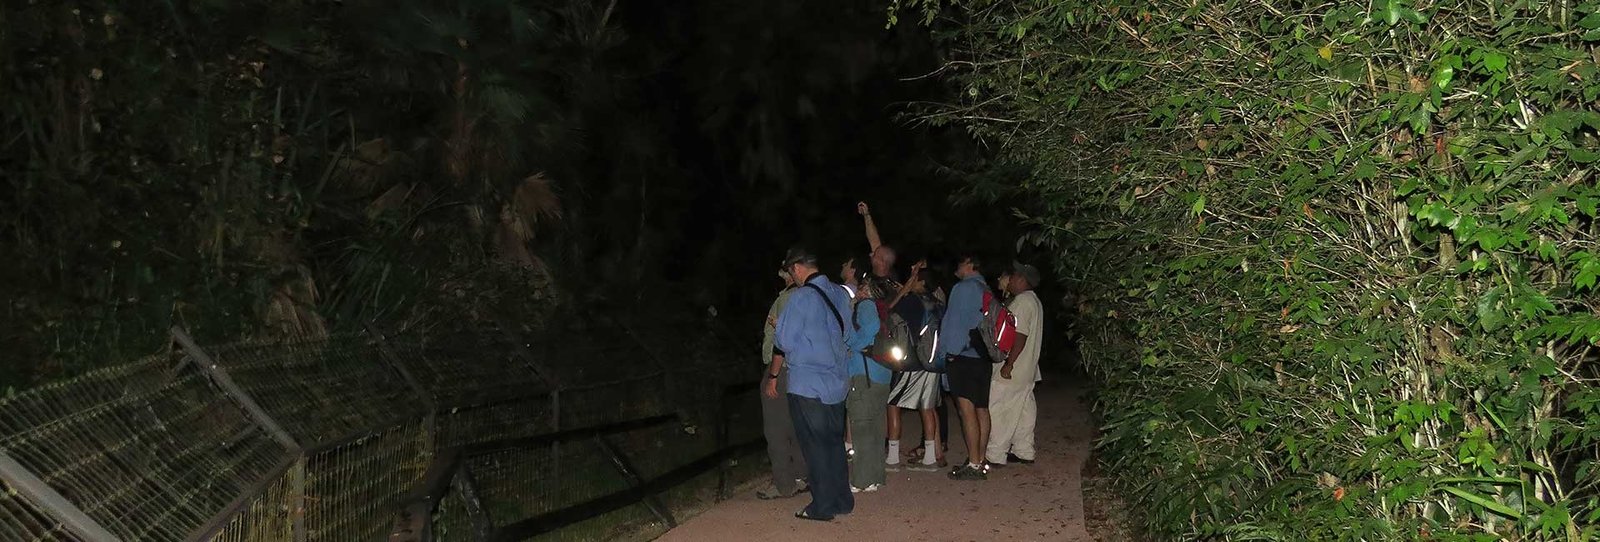 Belize Zoo Nocturnal Tour